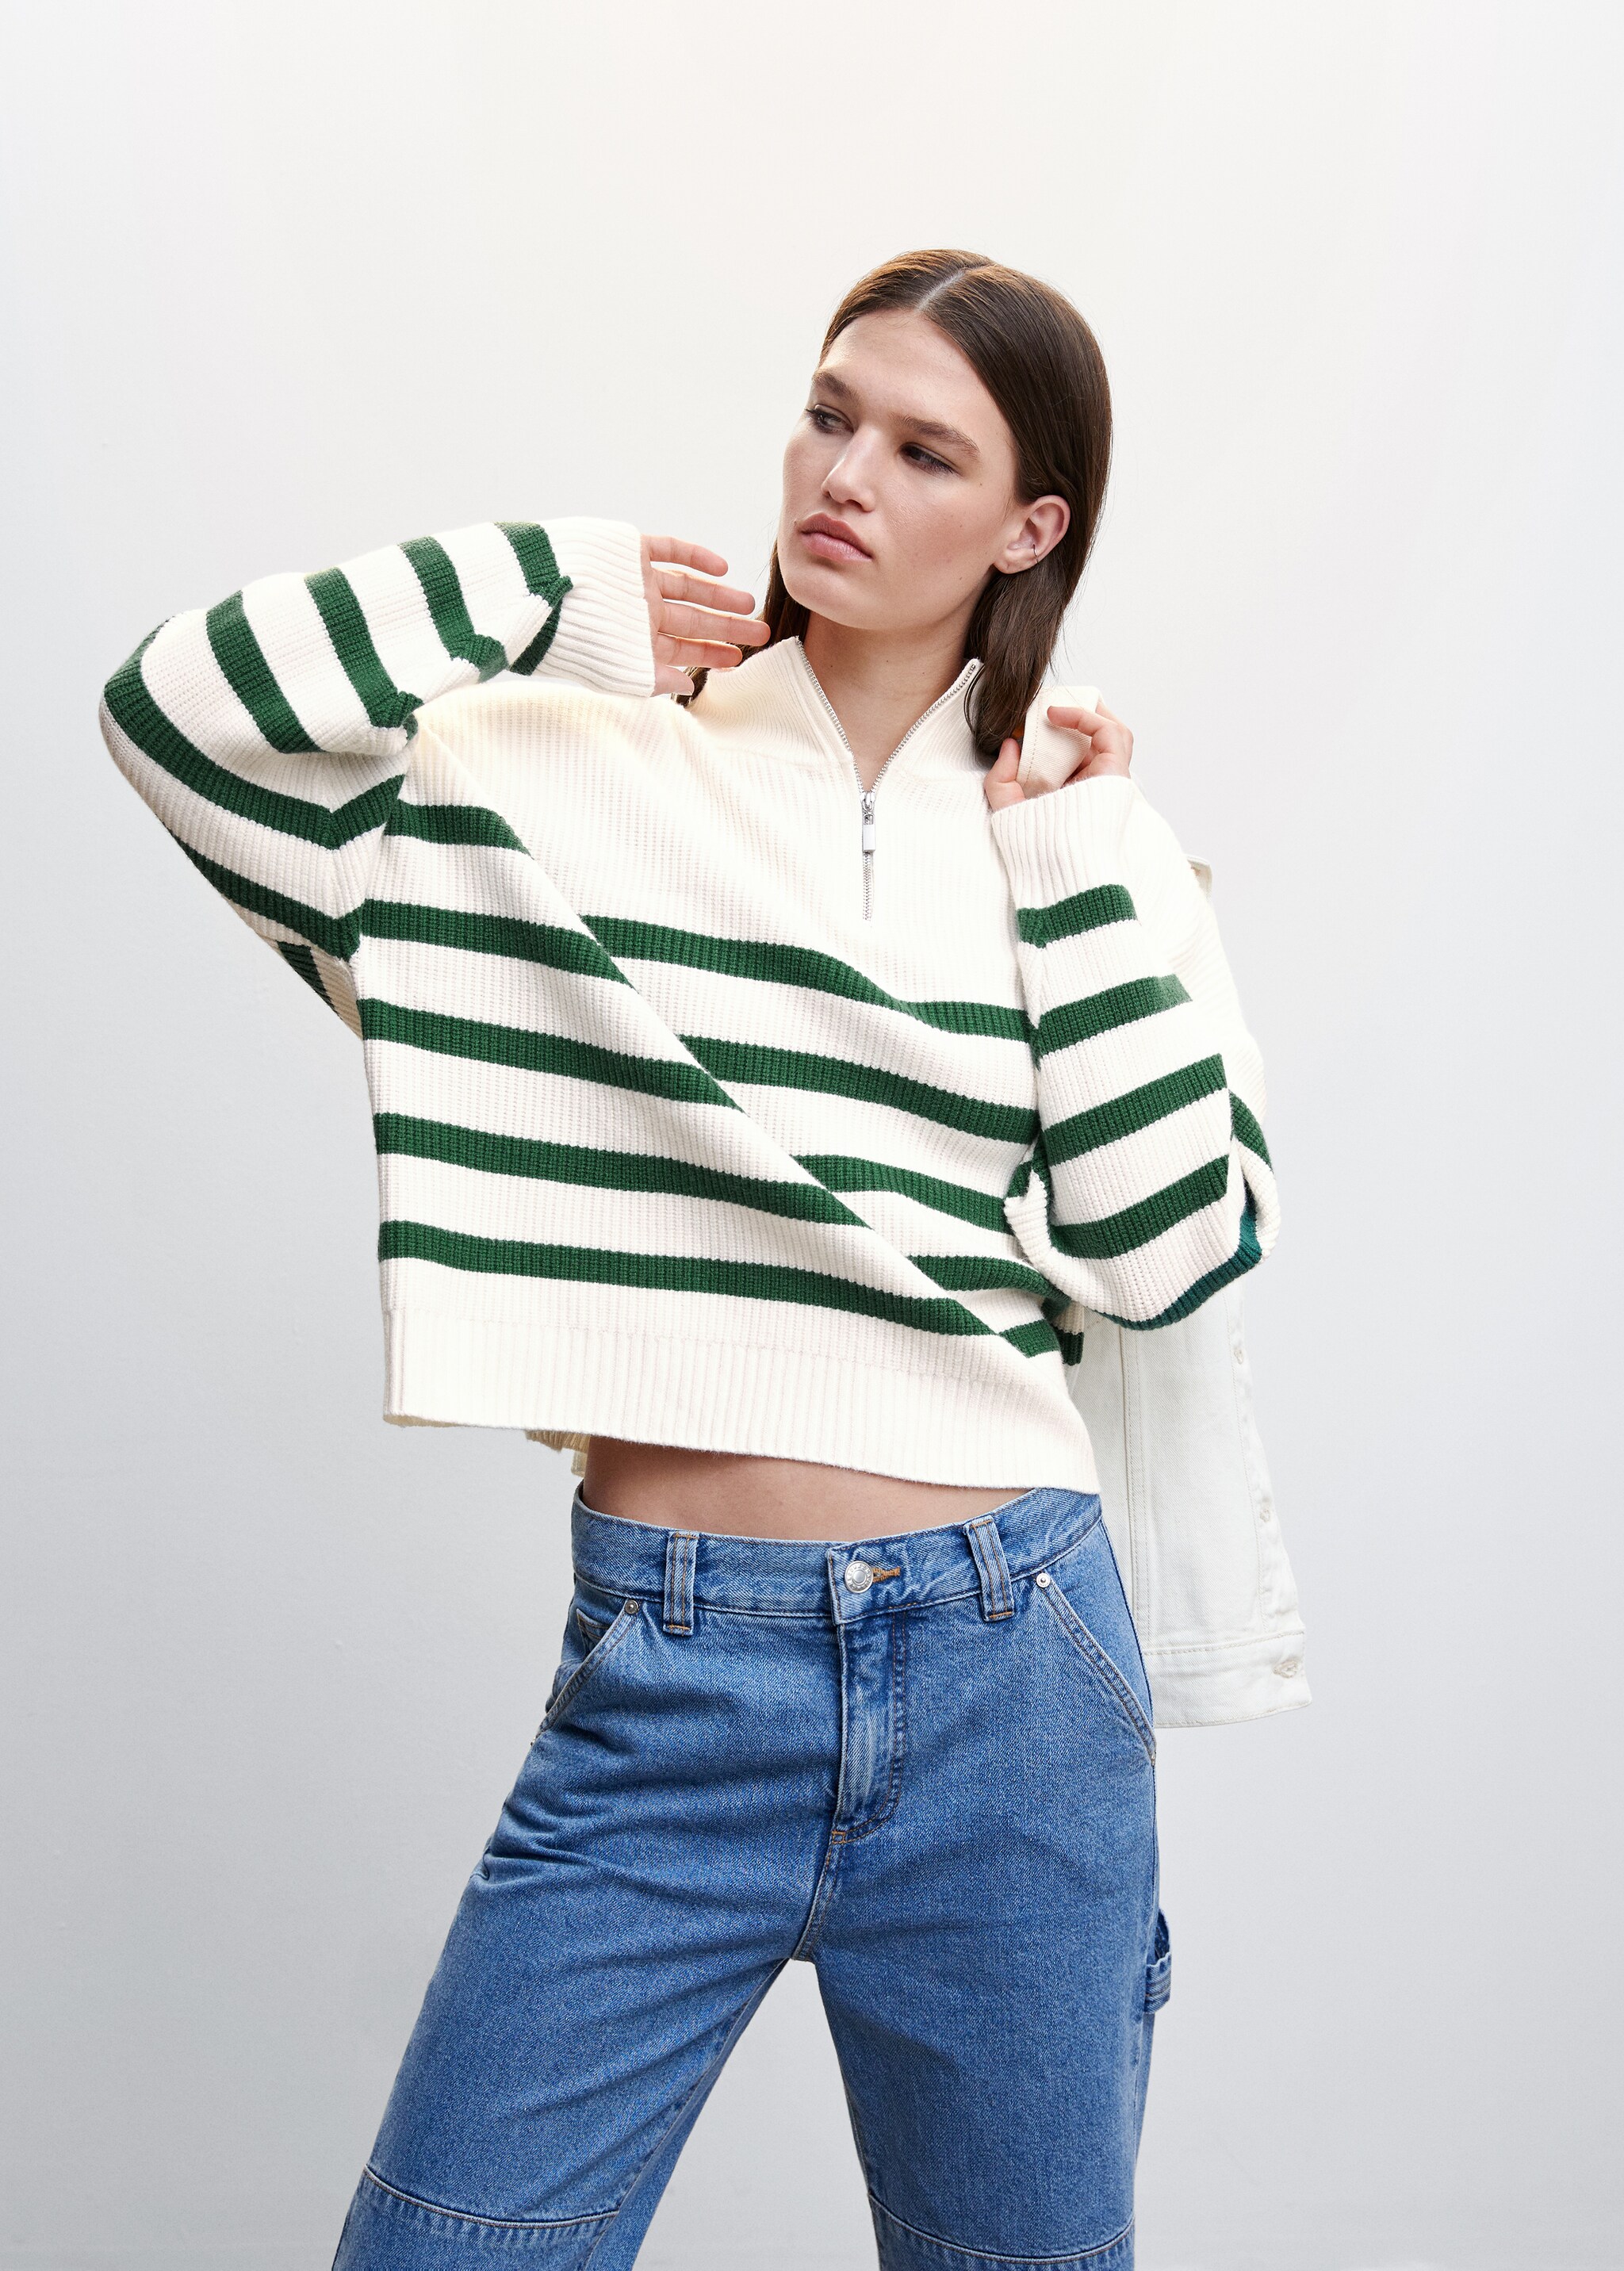 Striped sweater with zip - Medium plane